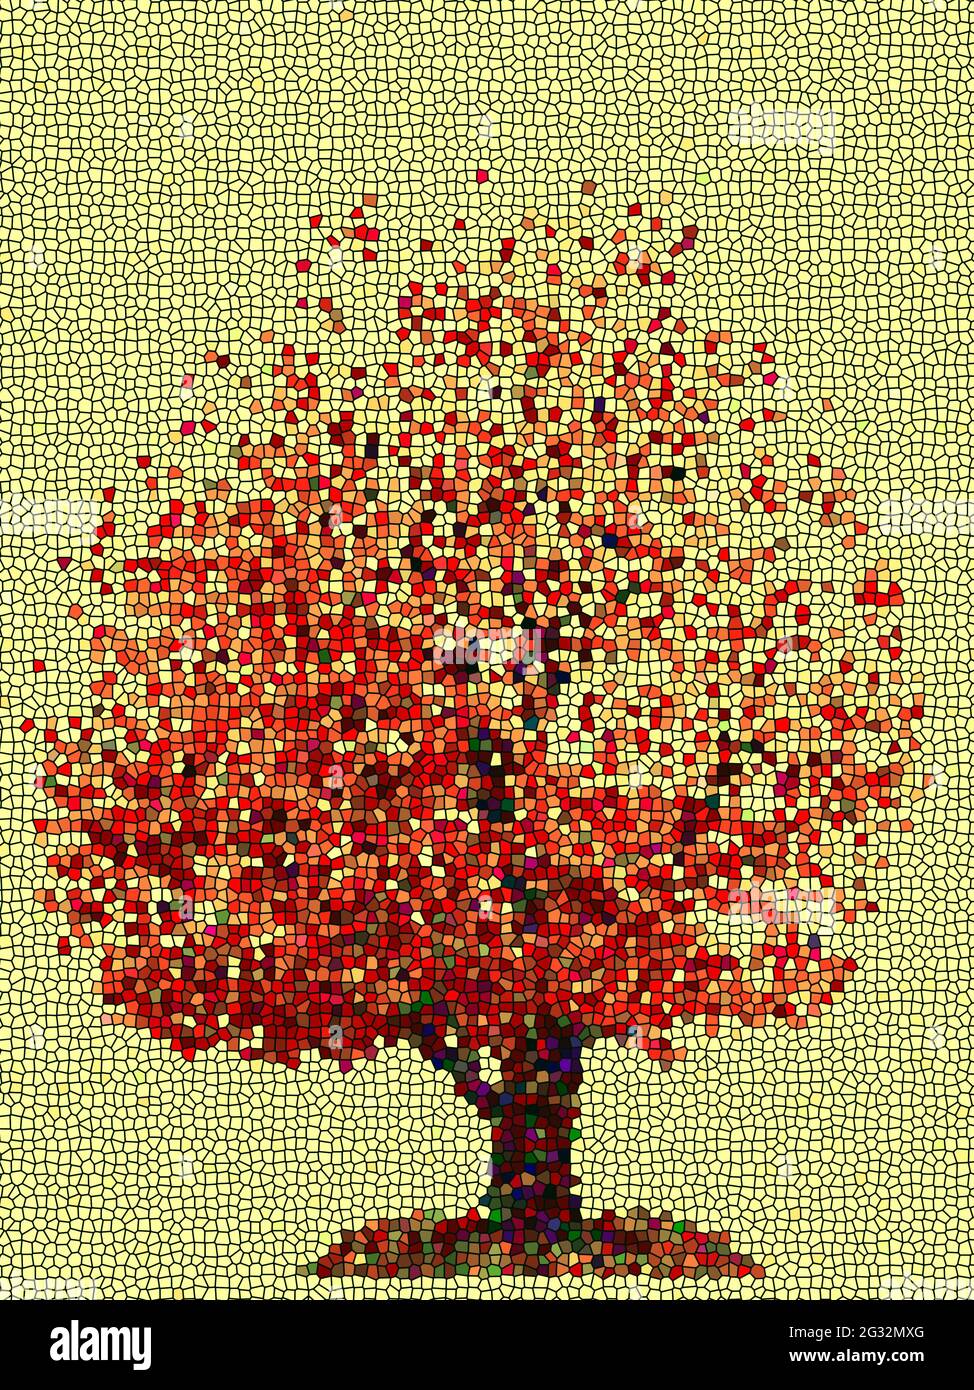 Autumn cherry tree, colorful mosaic artistic illustration, geometric artwork background Stock Photo